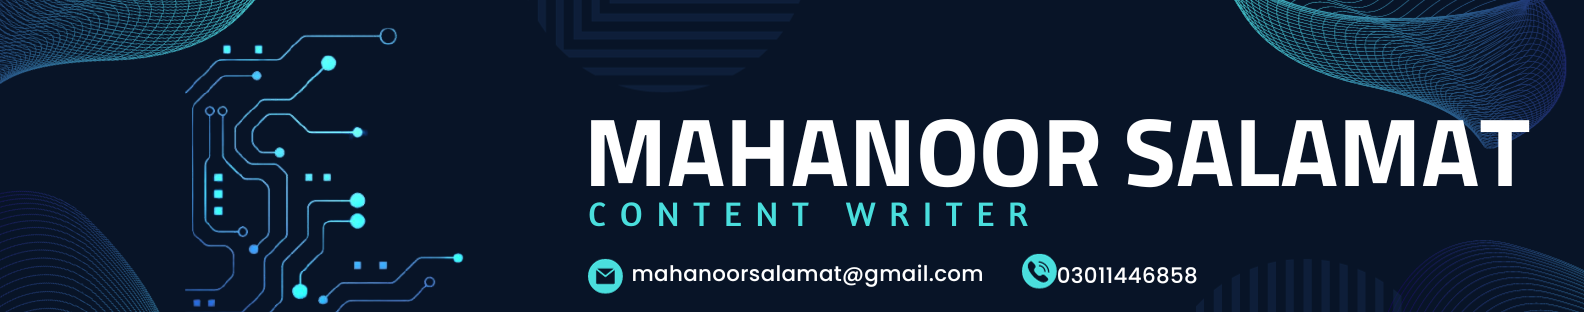 Banner de perfil de Mahanoor Salamat